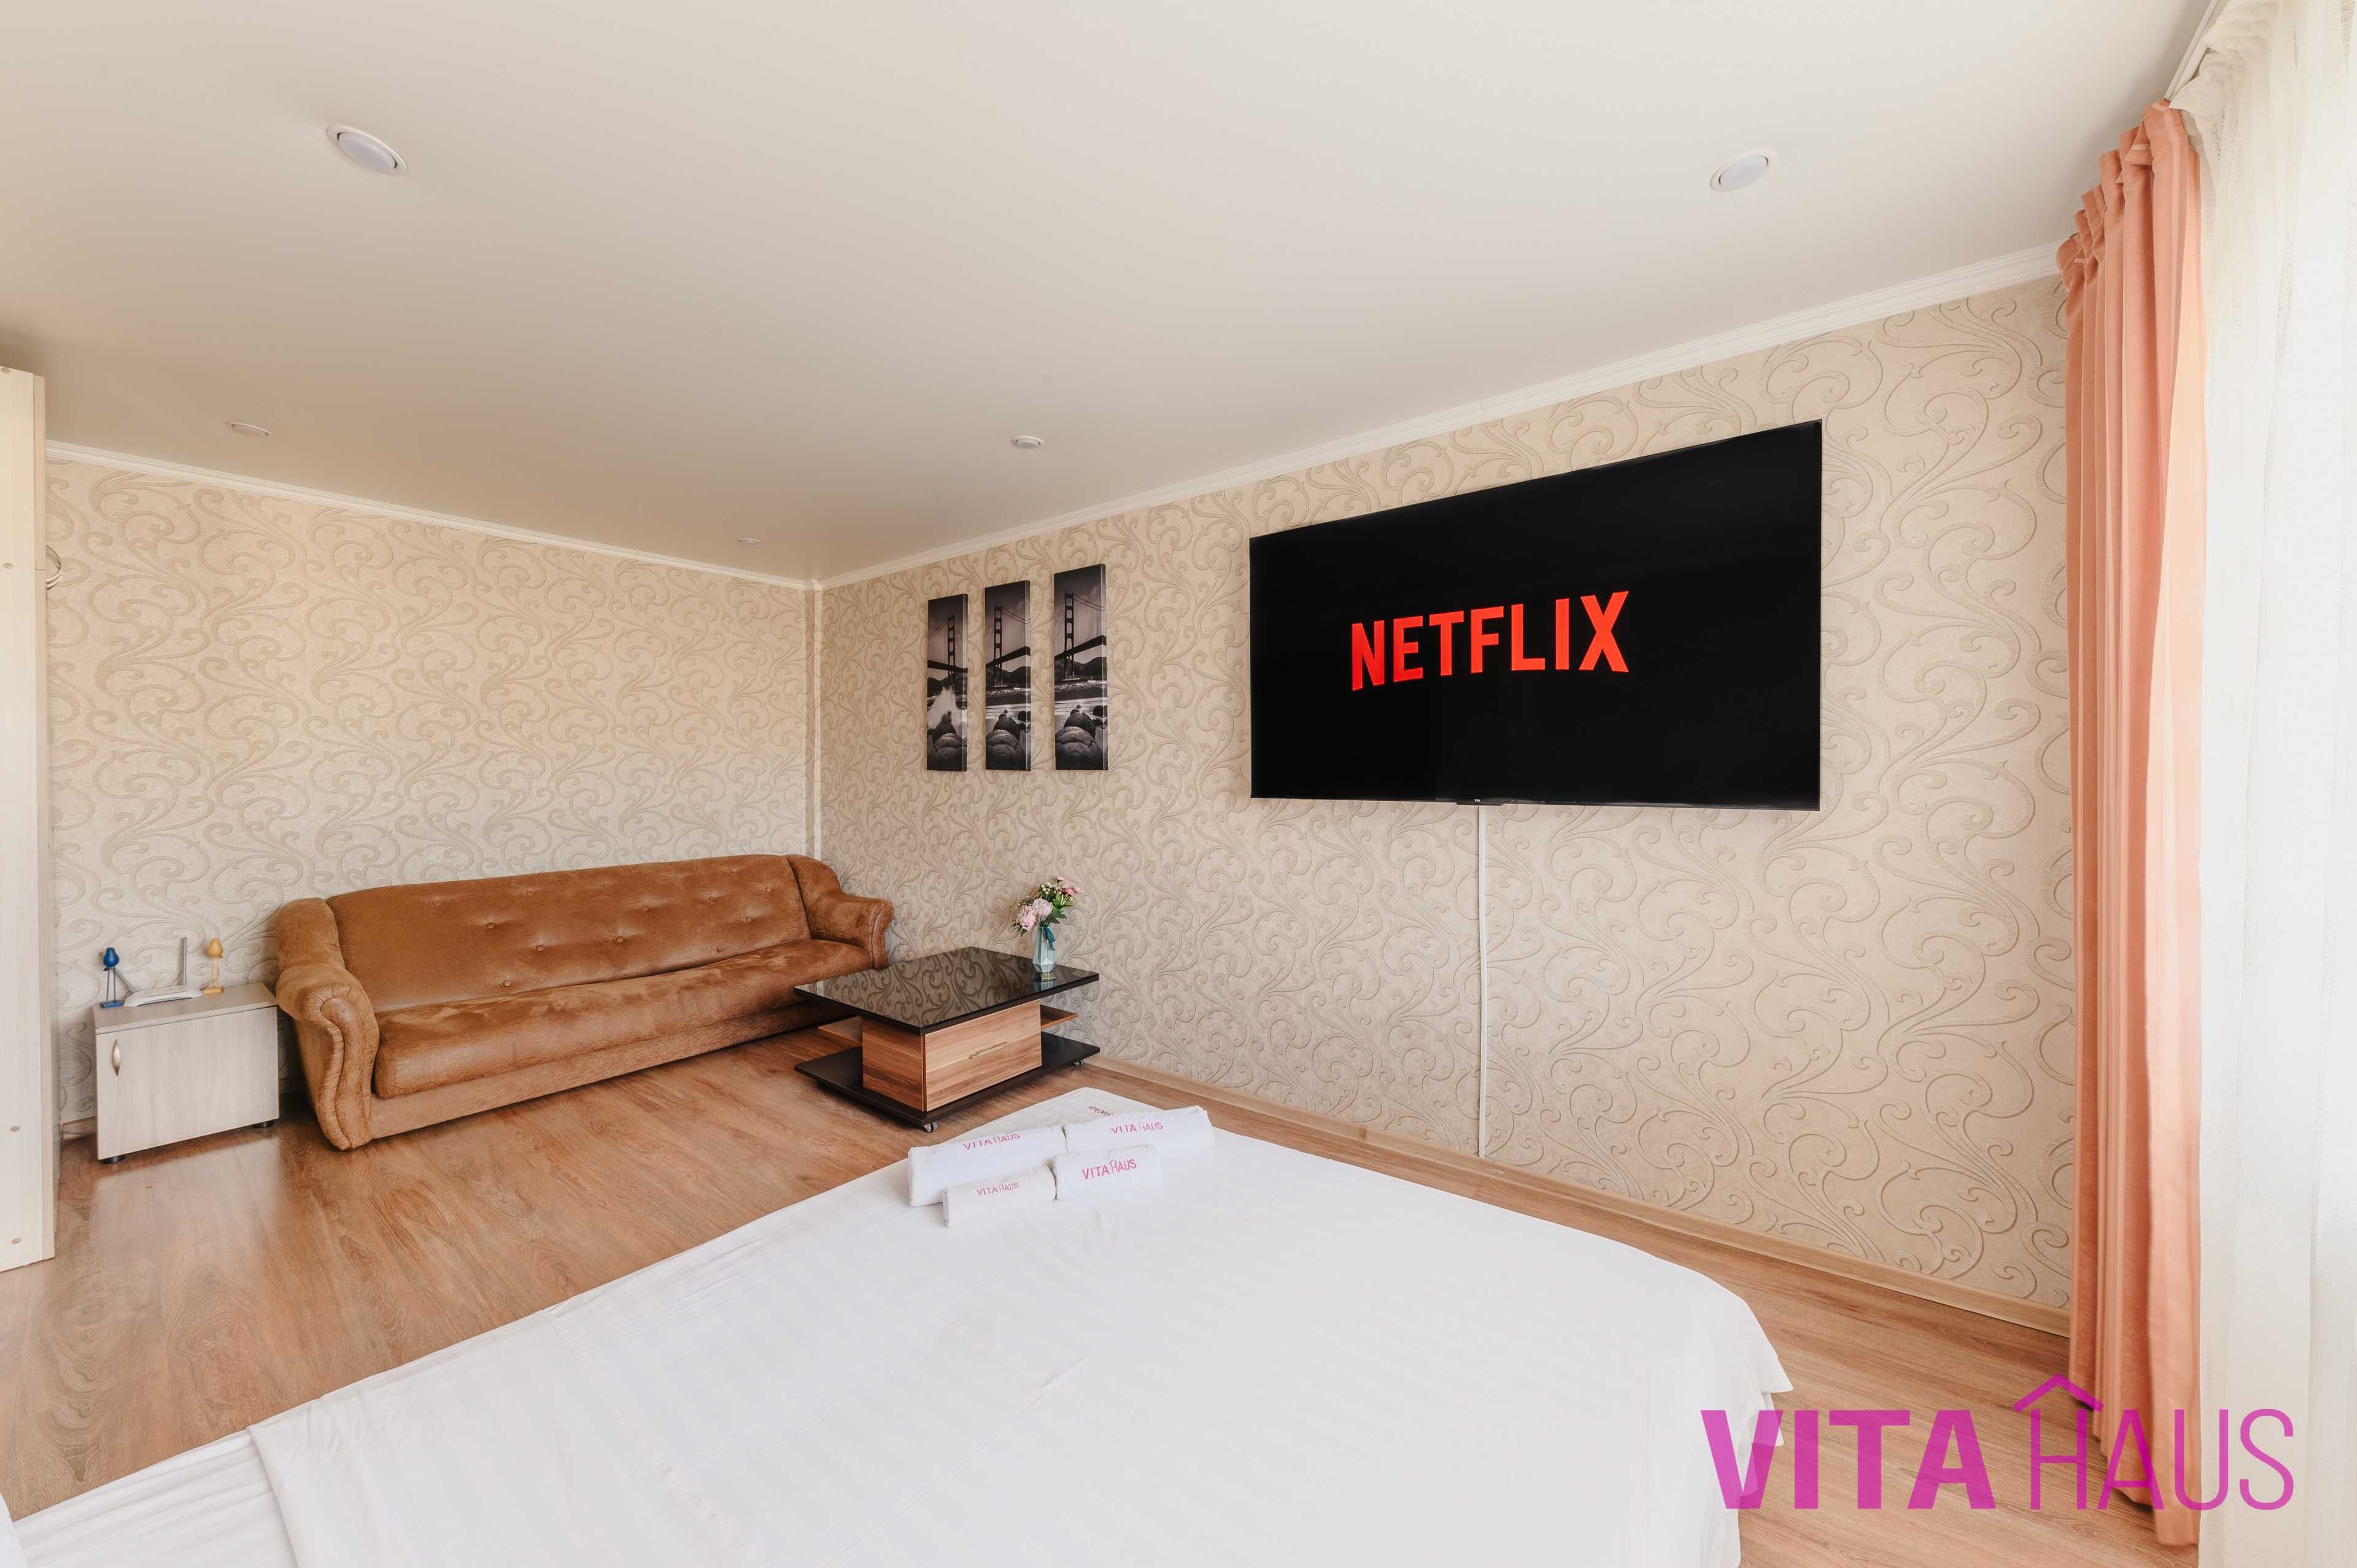 1 Ком. Квартира Почасово от Vita Haus. Wi|Fi |SMARTTV| Youtube Premium